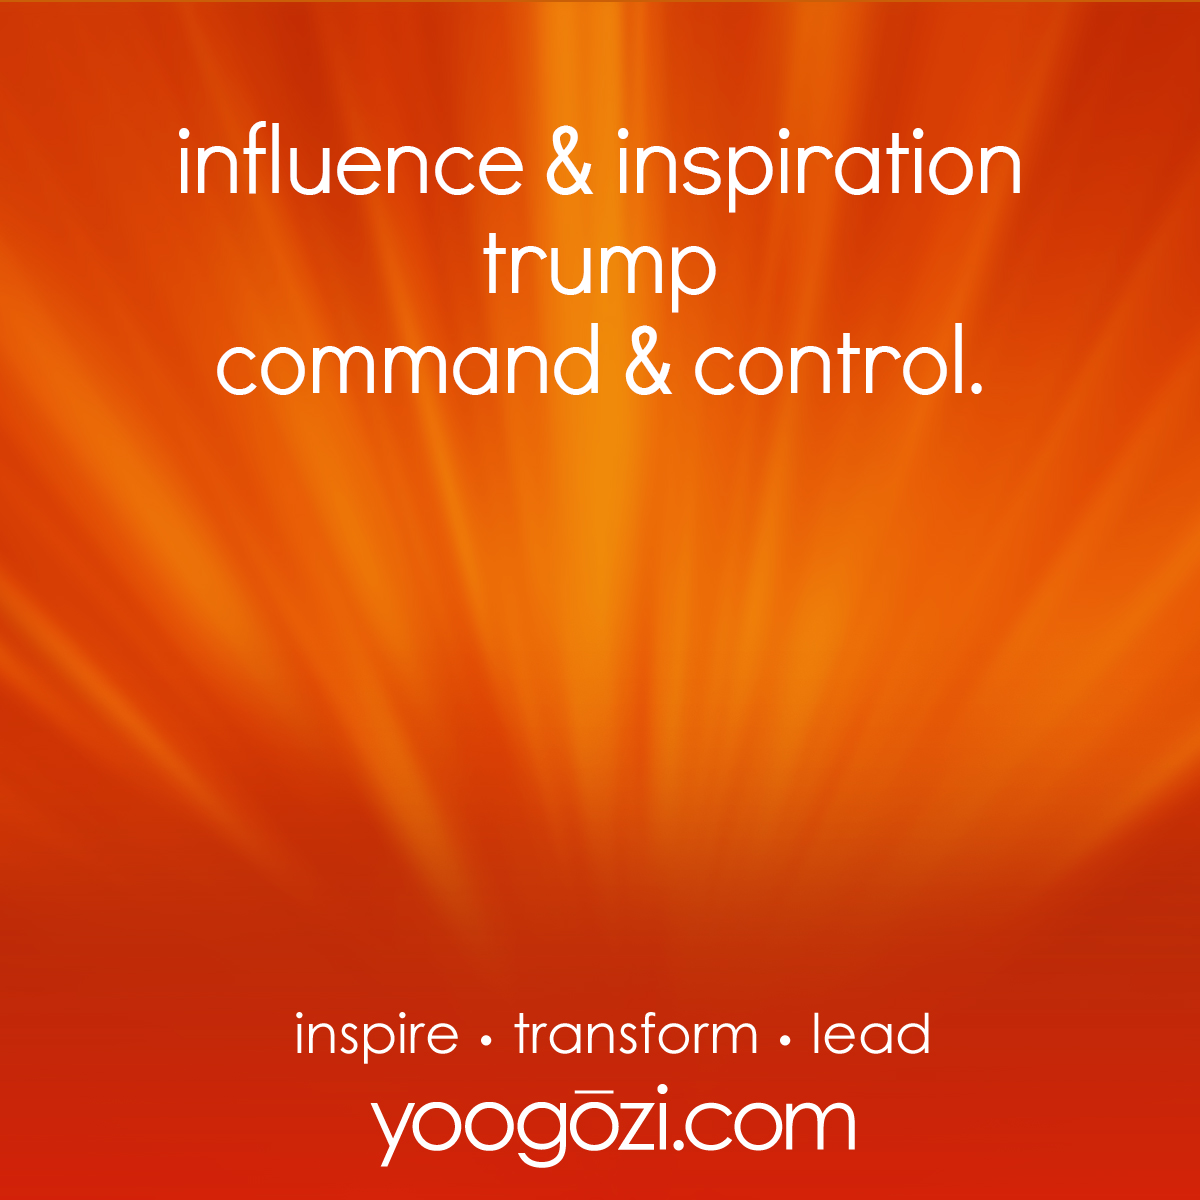 influence & inspiration, trump command & control.